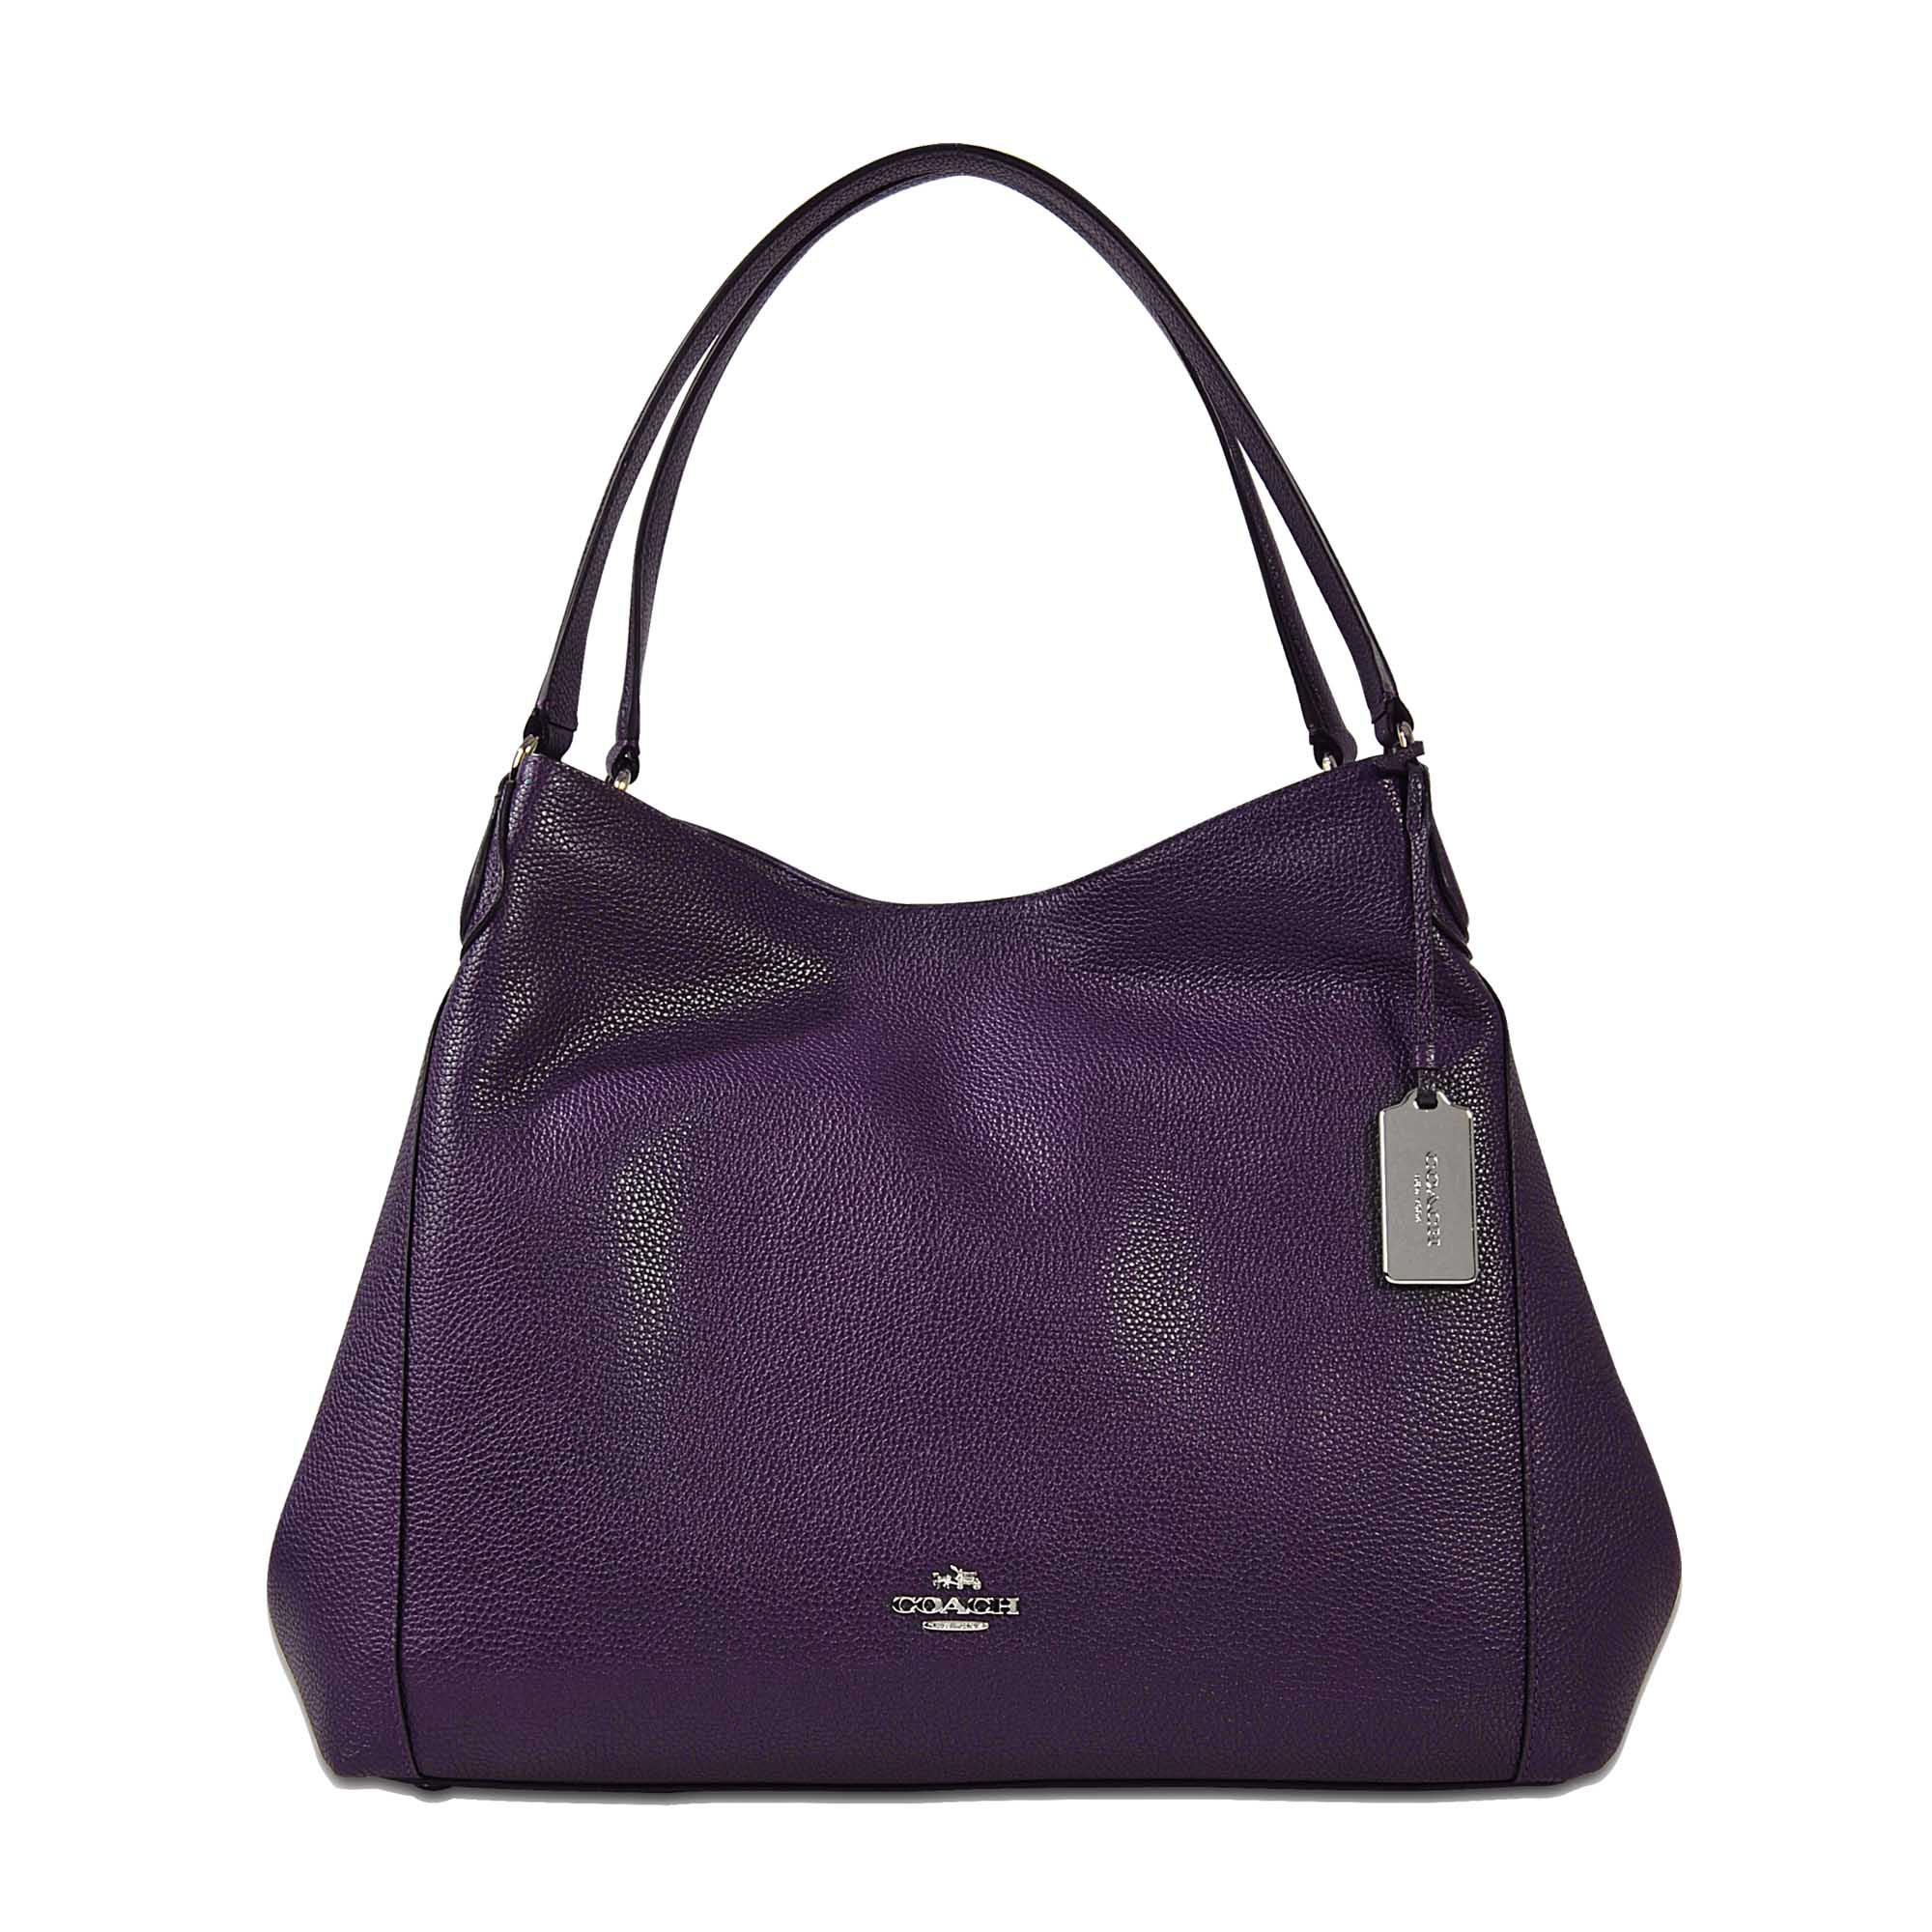 COACH Edie Shoulder Bag In Leather in Purple - Lyst